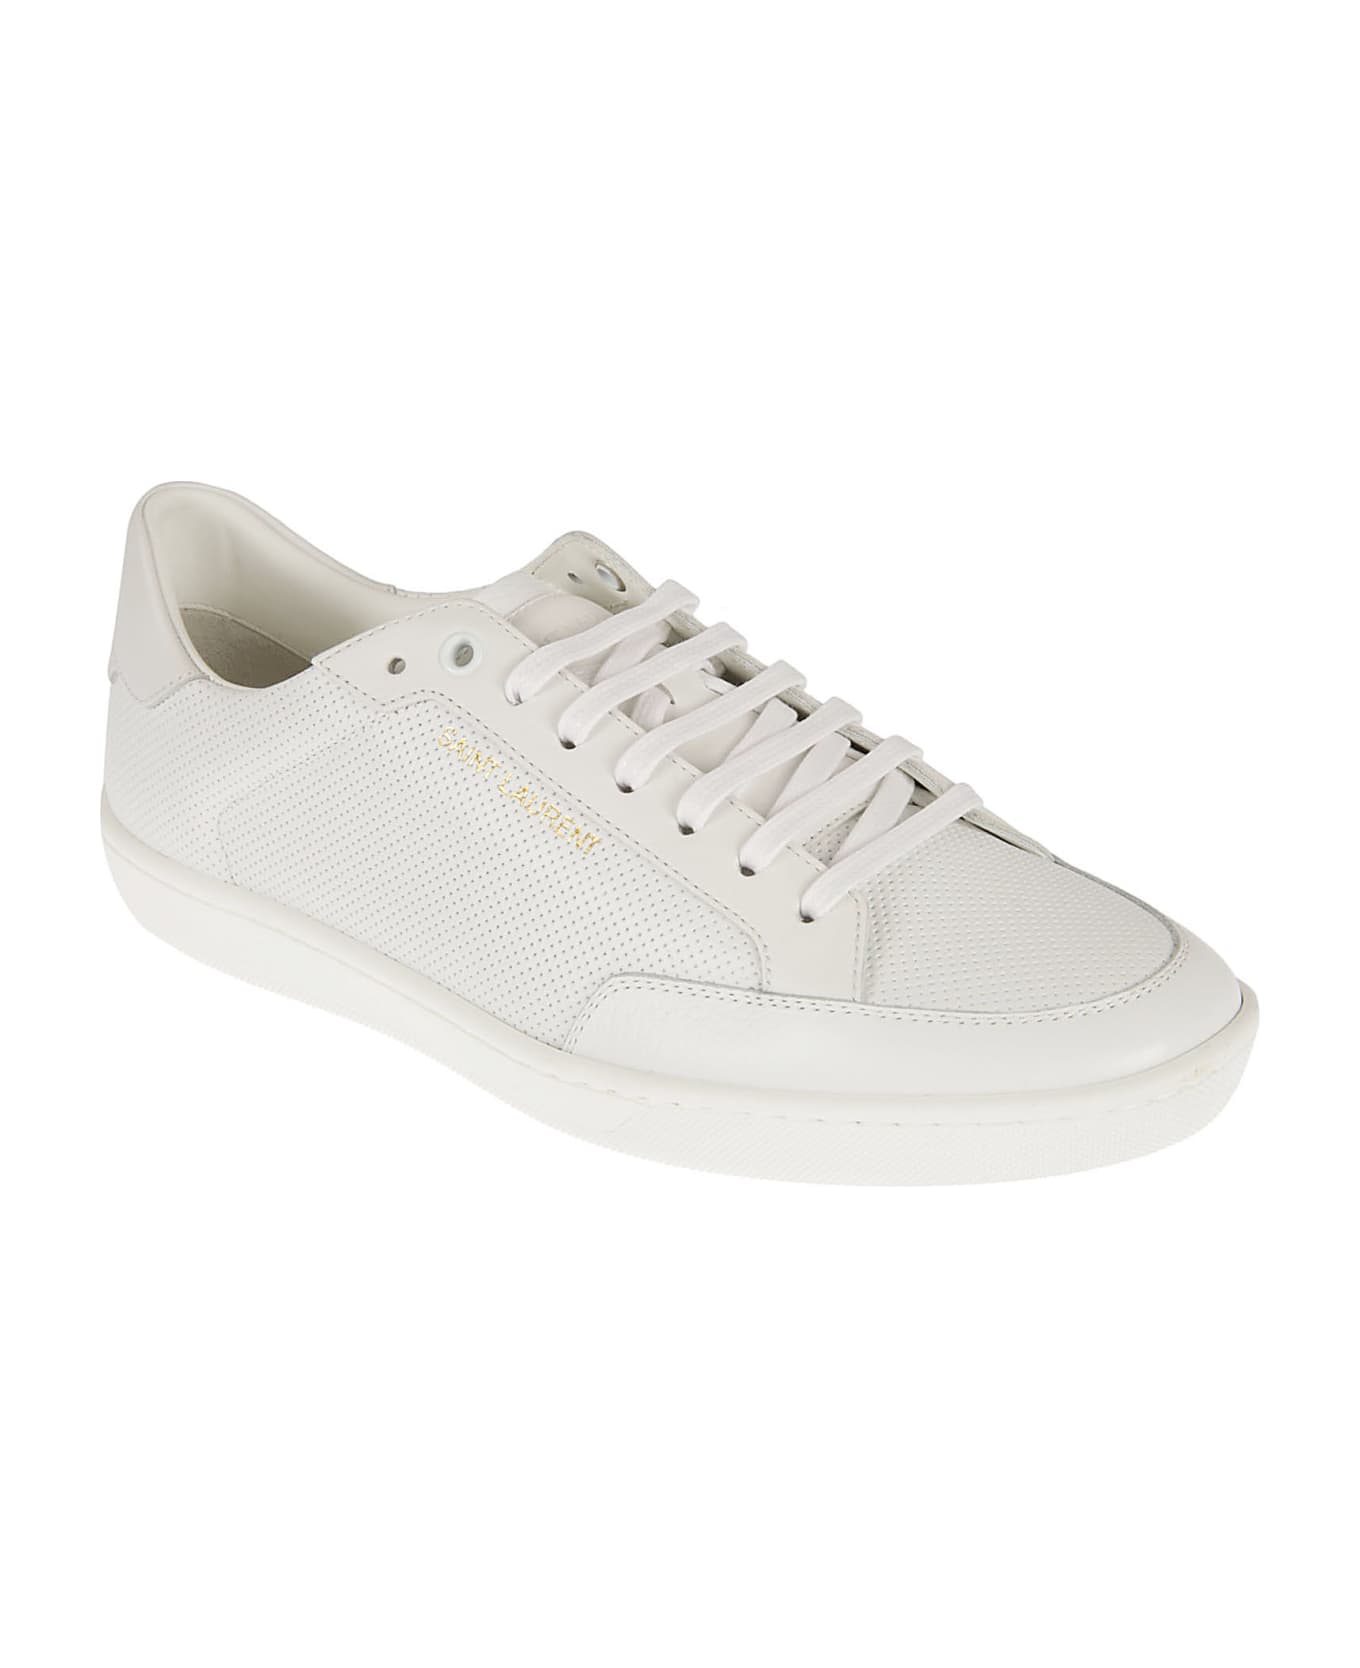 Saint Laurent Sl/10 Low Top Sneakers - Optic White